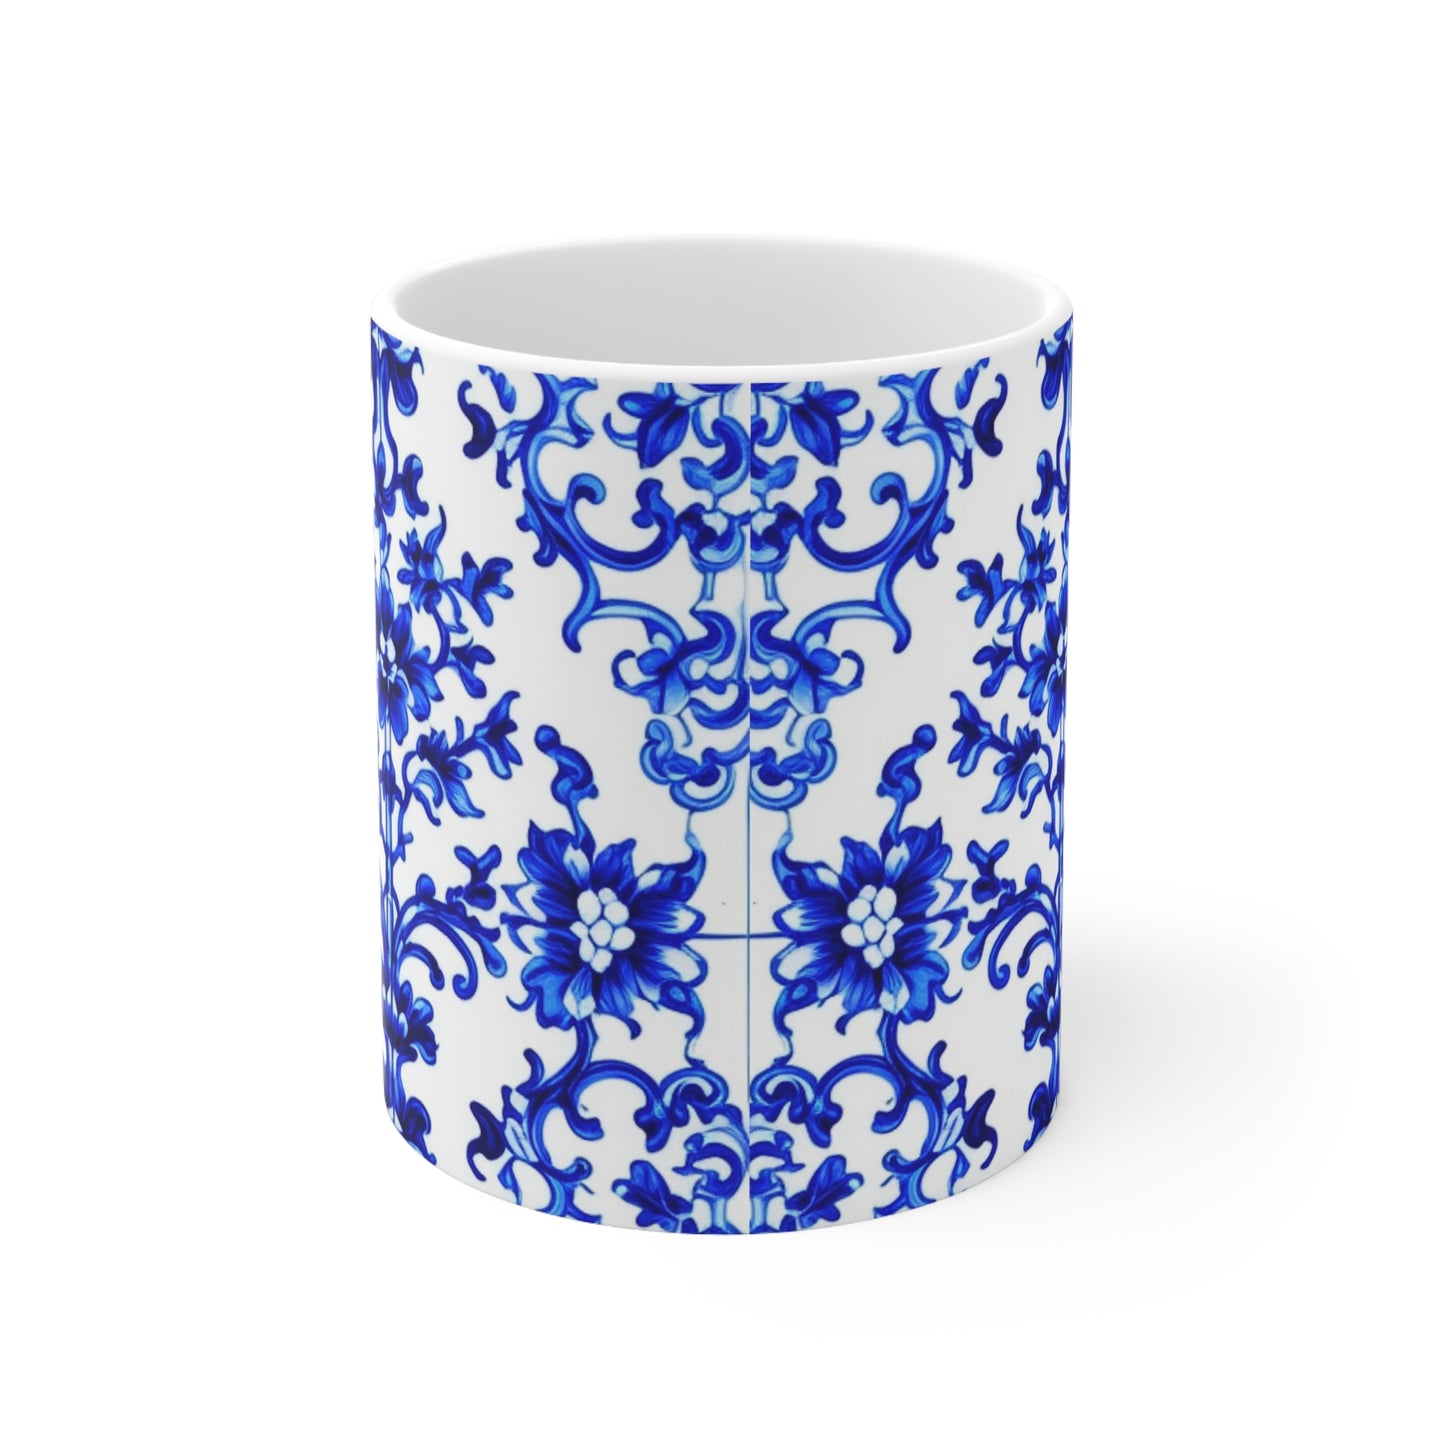 Portuguese Blue and White Tile Pattern Hot Beverage Coffee Tea Decorative Ceramic Mug 11oz